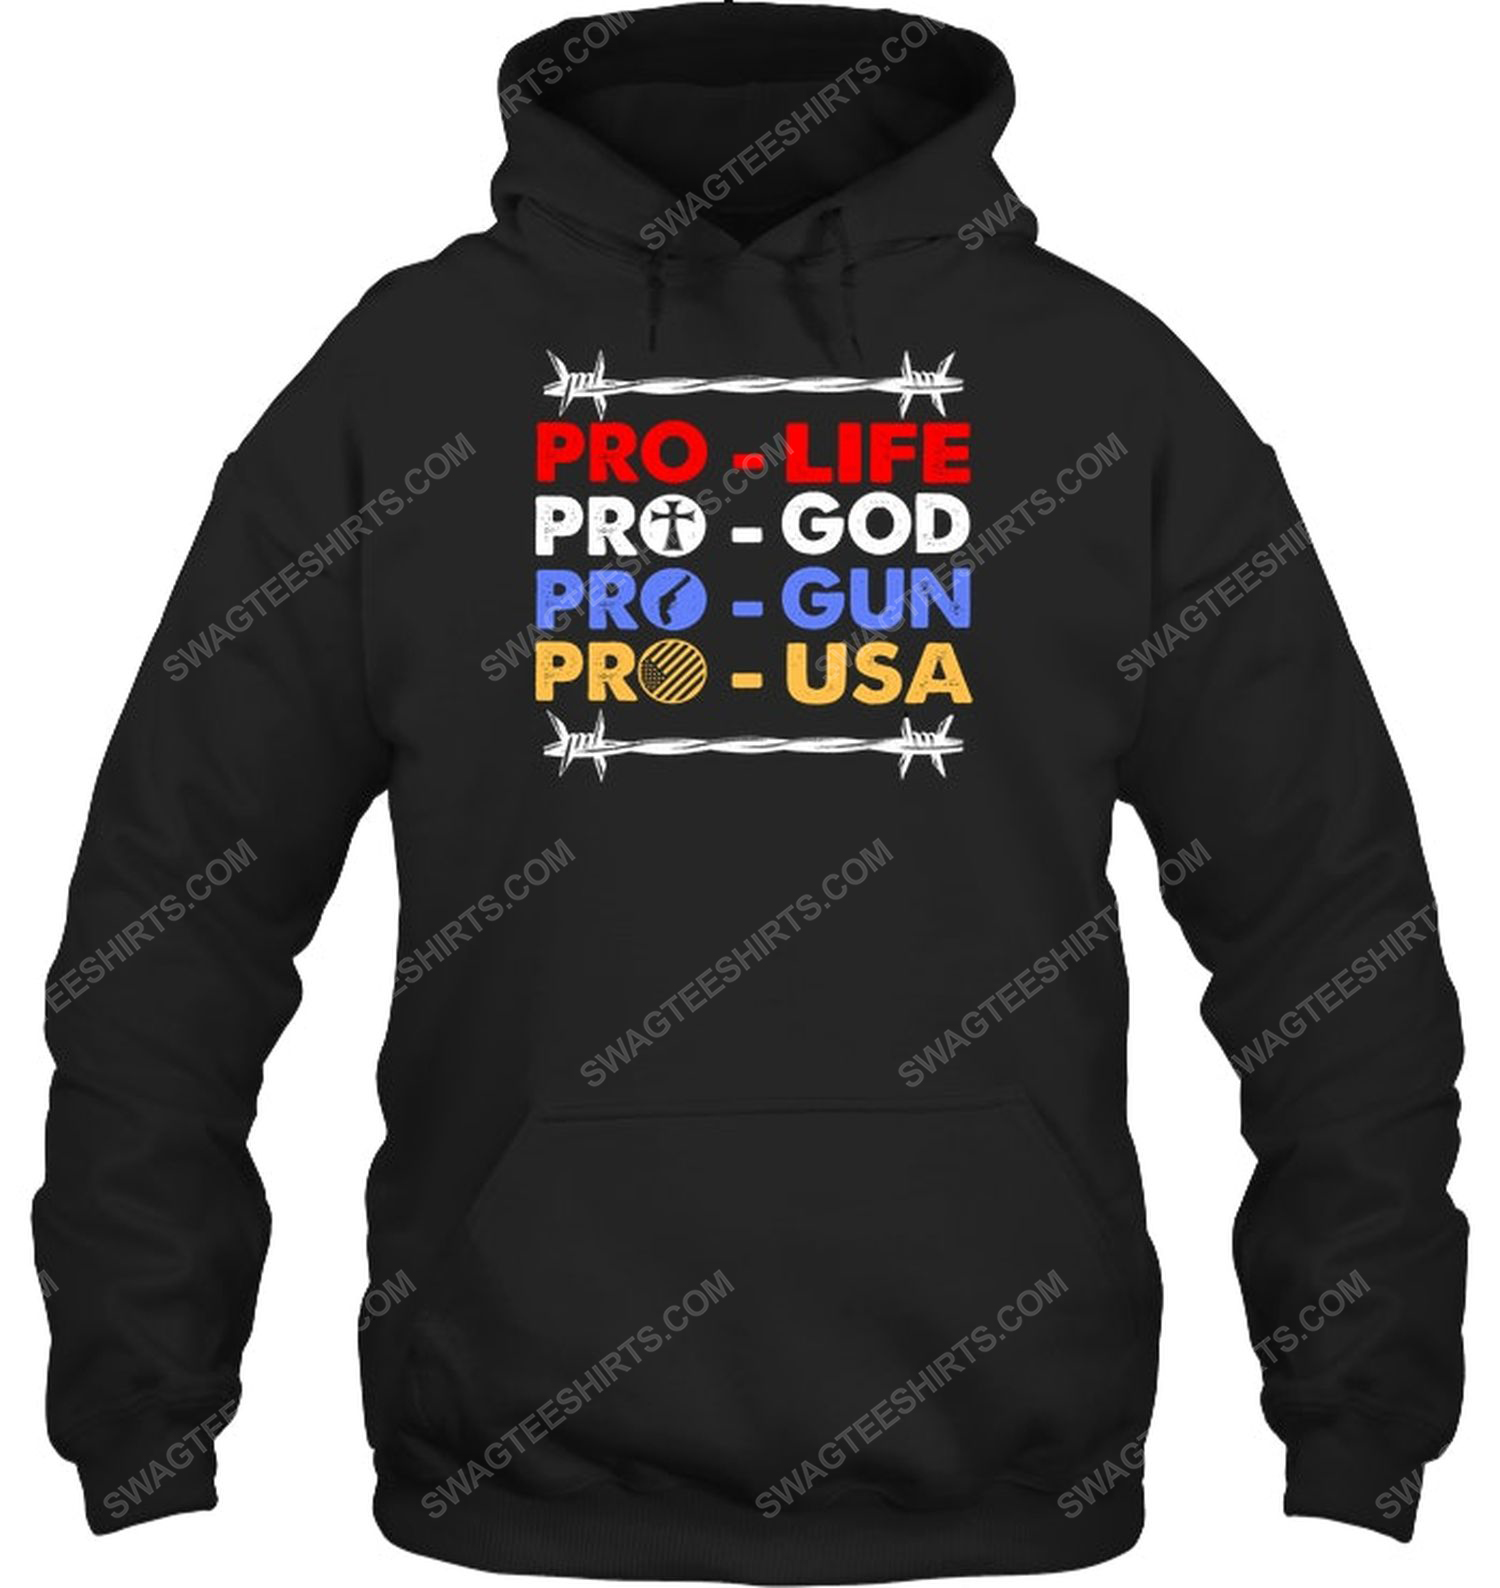 Pro life pro god pro gun pro usa political hoodie